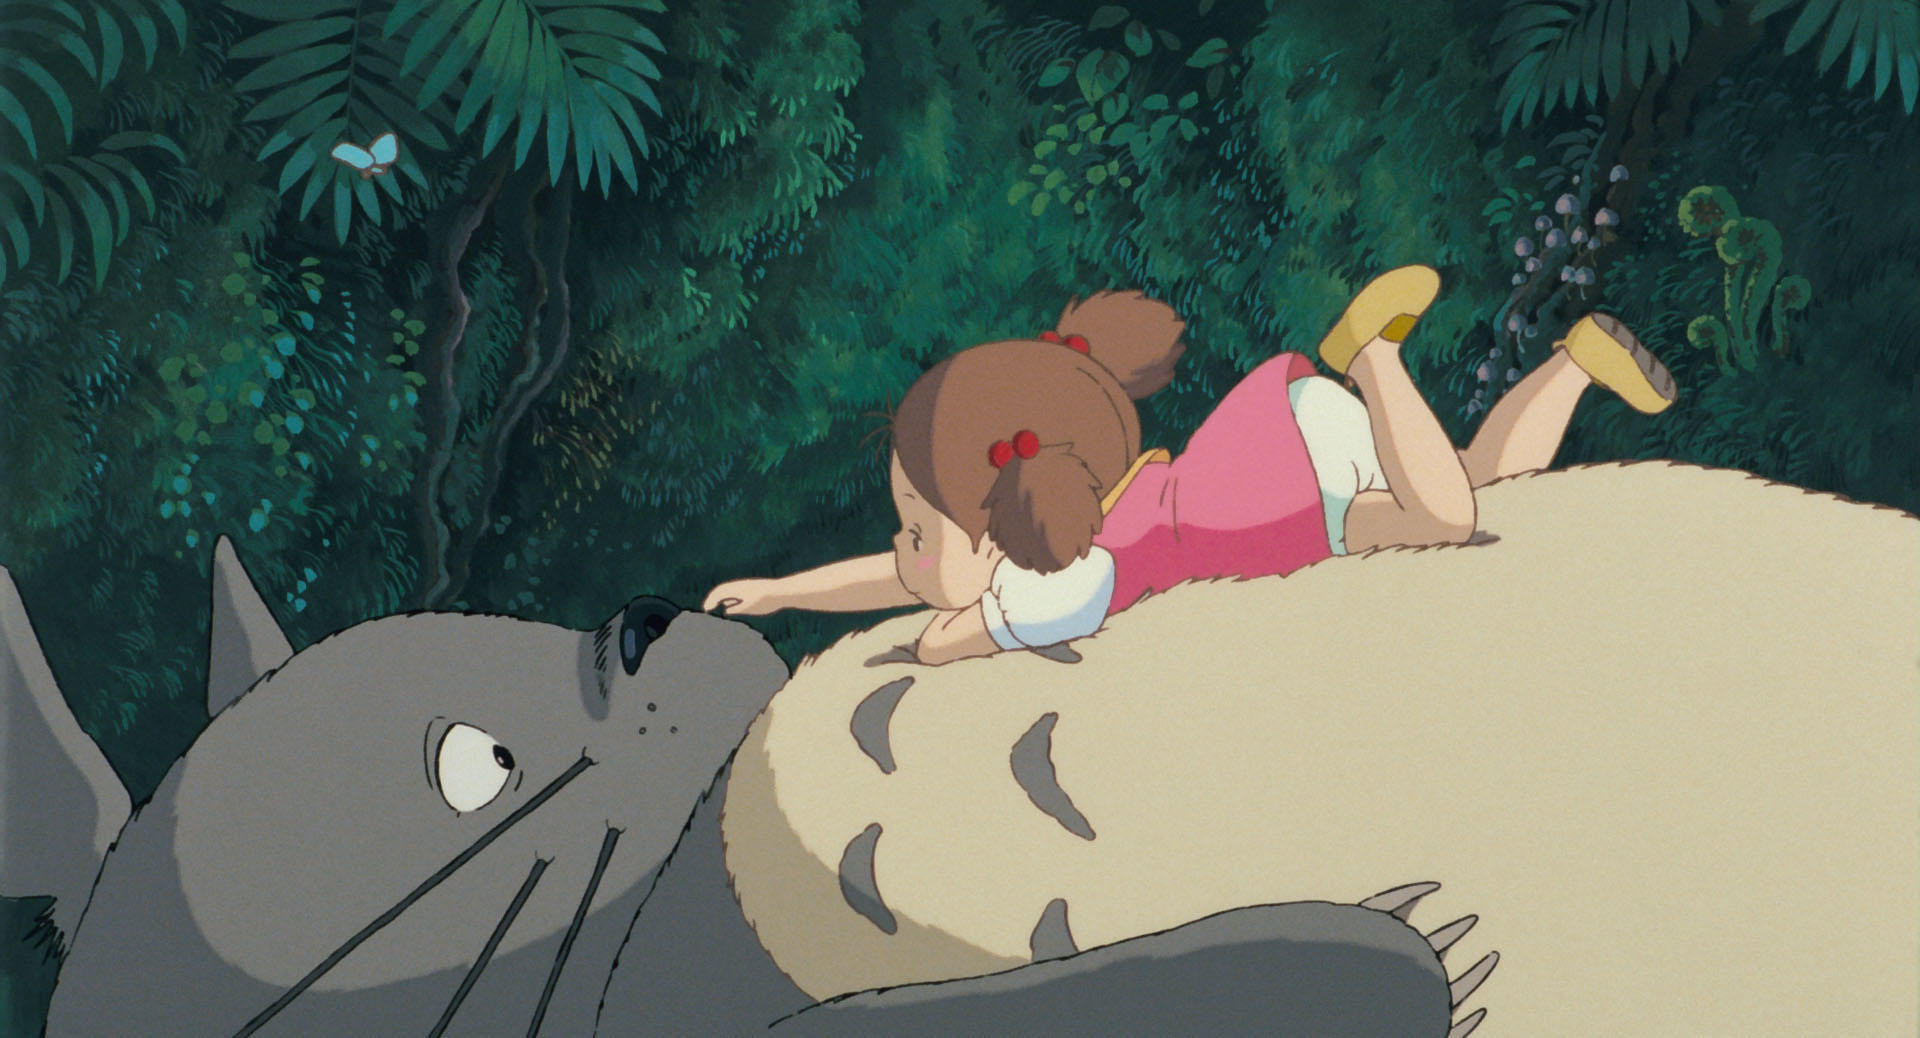 Ghibli Park is screening 'My Neighbor Totoro' sequel this November